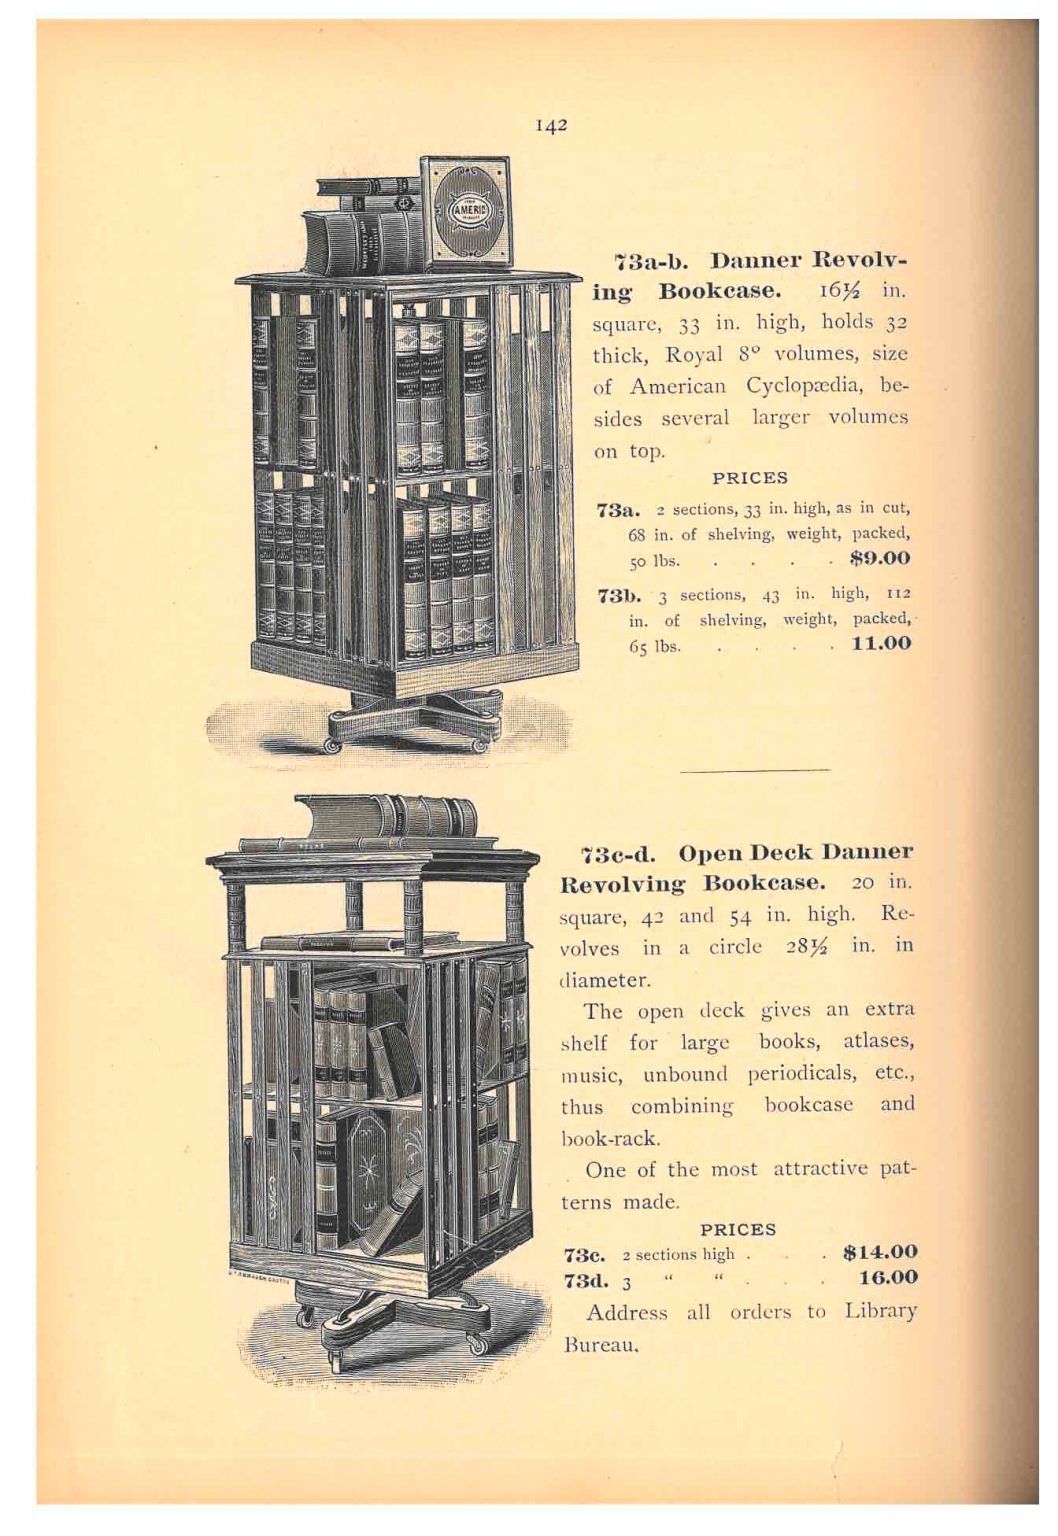 Trade catalog illustration of two revolving bookcases.